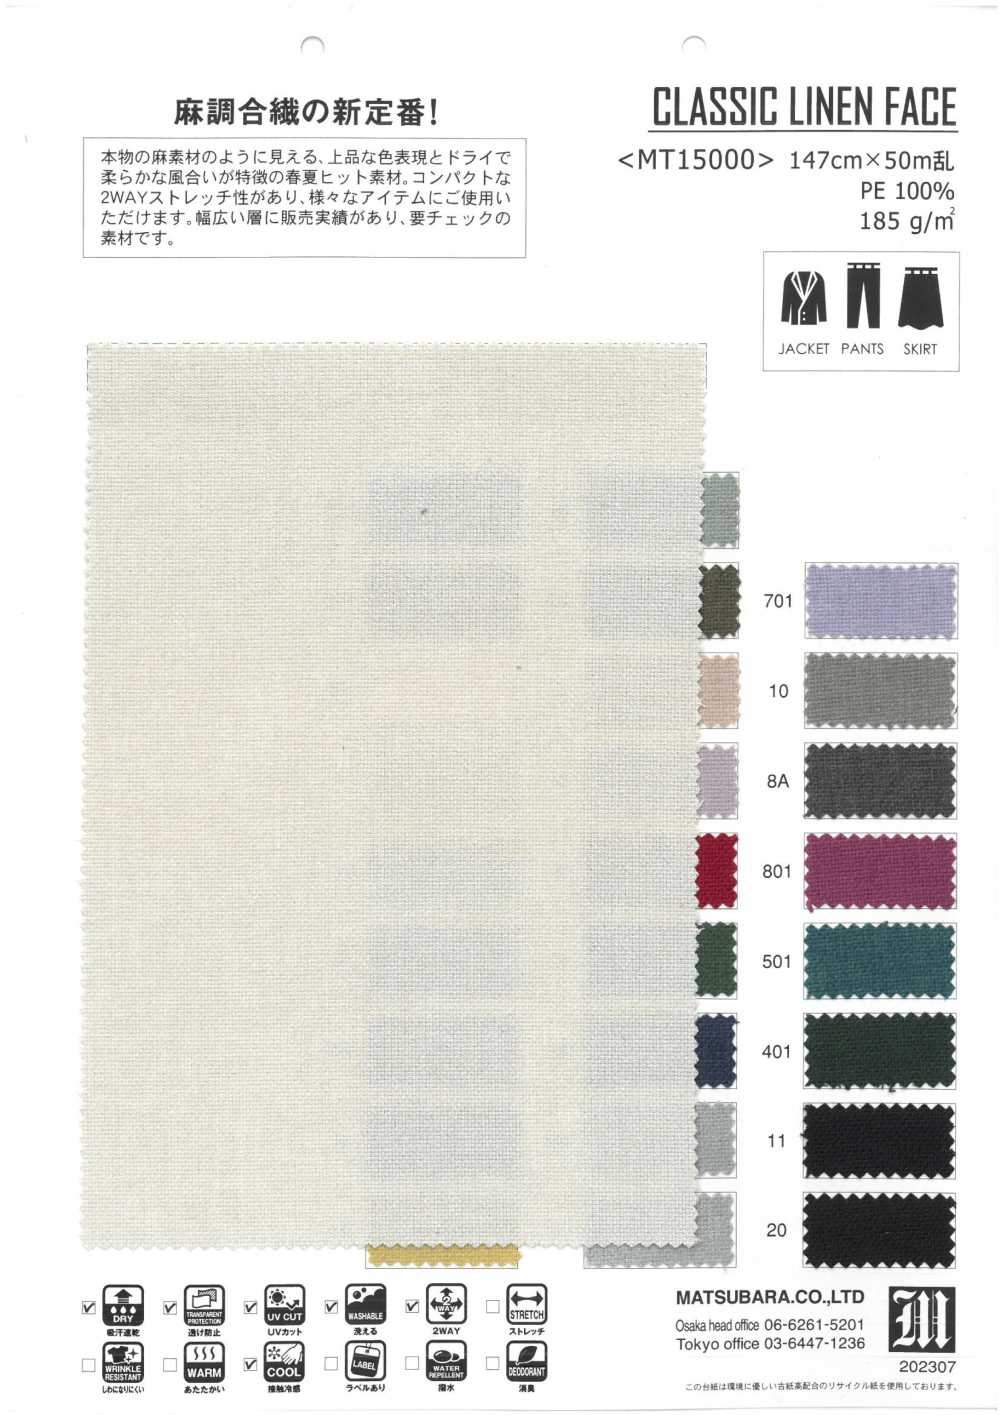 MT15000 CARA DE LINO CLÁSICO[Fabrica Textil] Matsubara